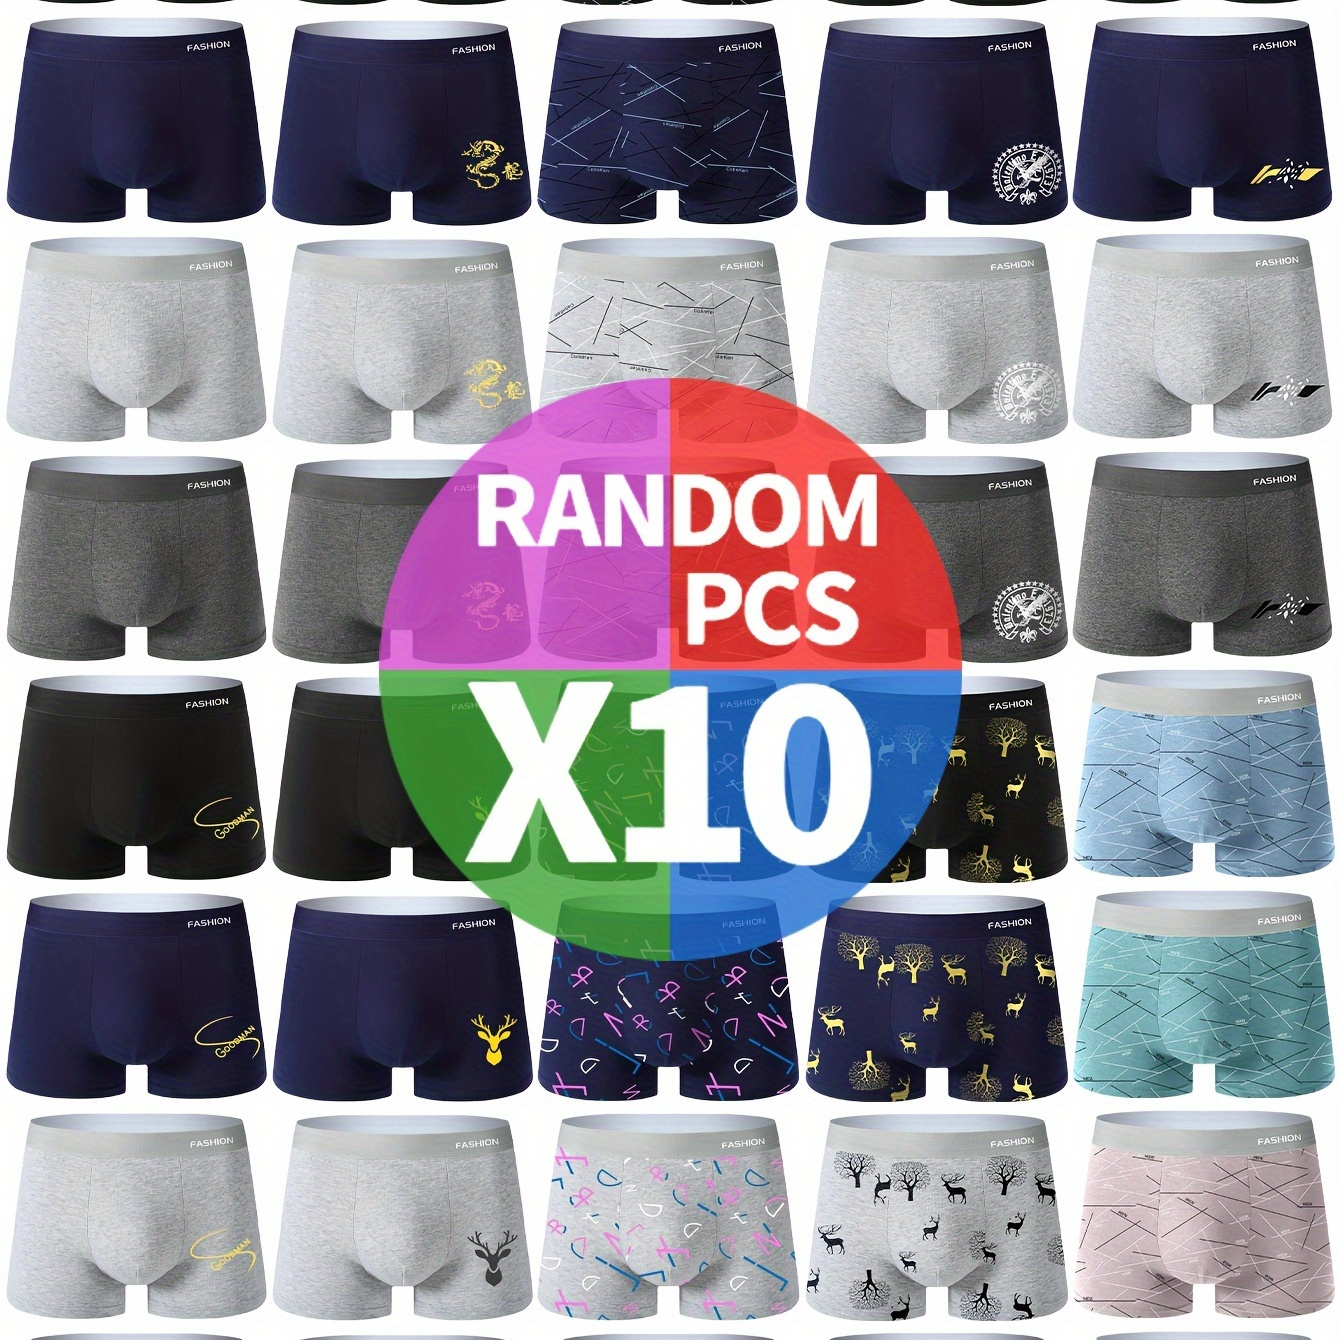 

Random 10pcs Men's Antibacterial Underwear, Casual Boxer Briefs Shorts, Breathable Comfy Stretchy Boxer Trunks, Sports Shorts